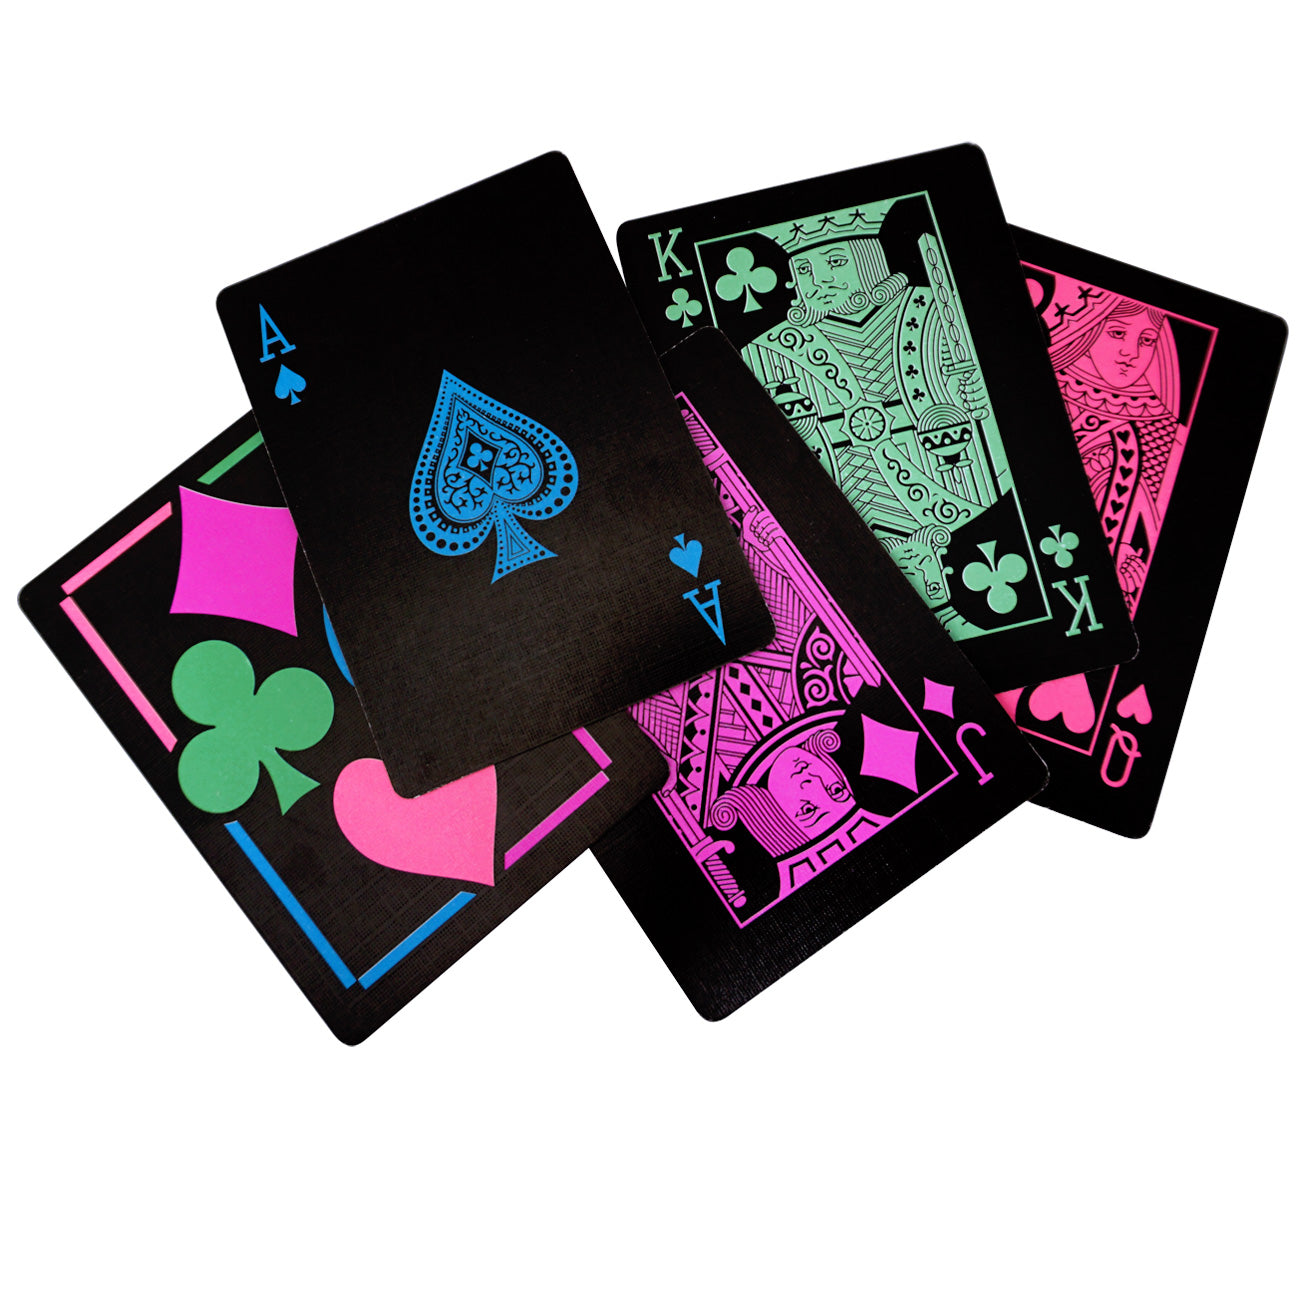 Black Light Playing Cards